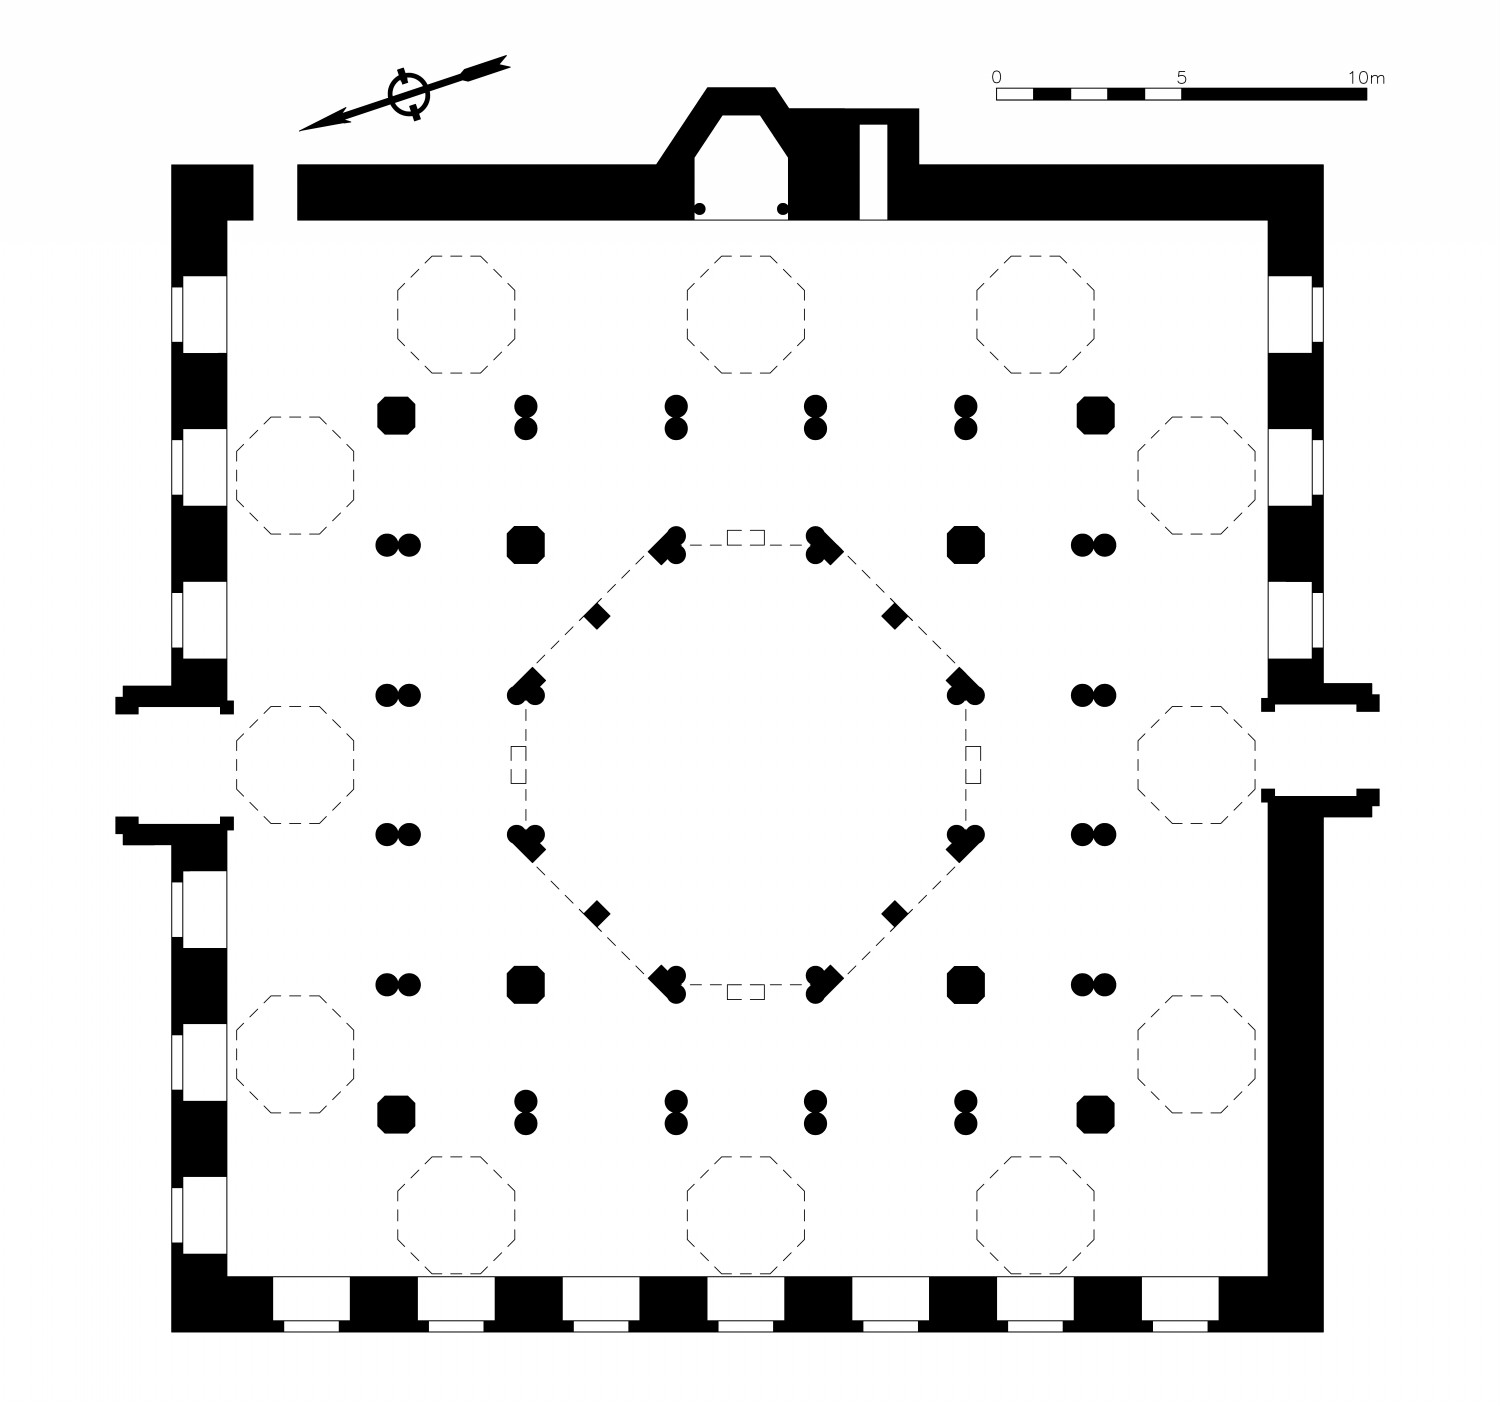 Plan of the prayer hall, Based on Bourouiba (1986)